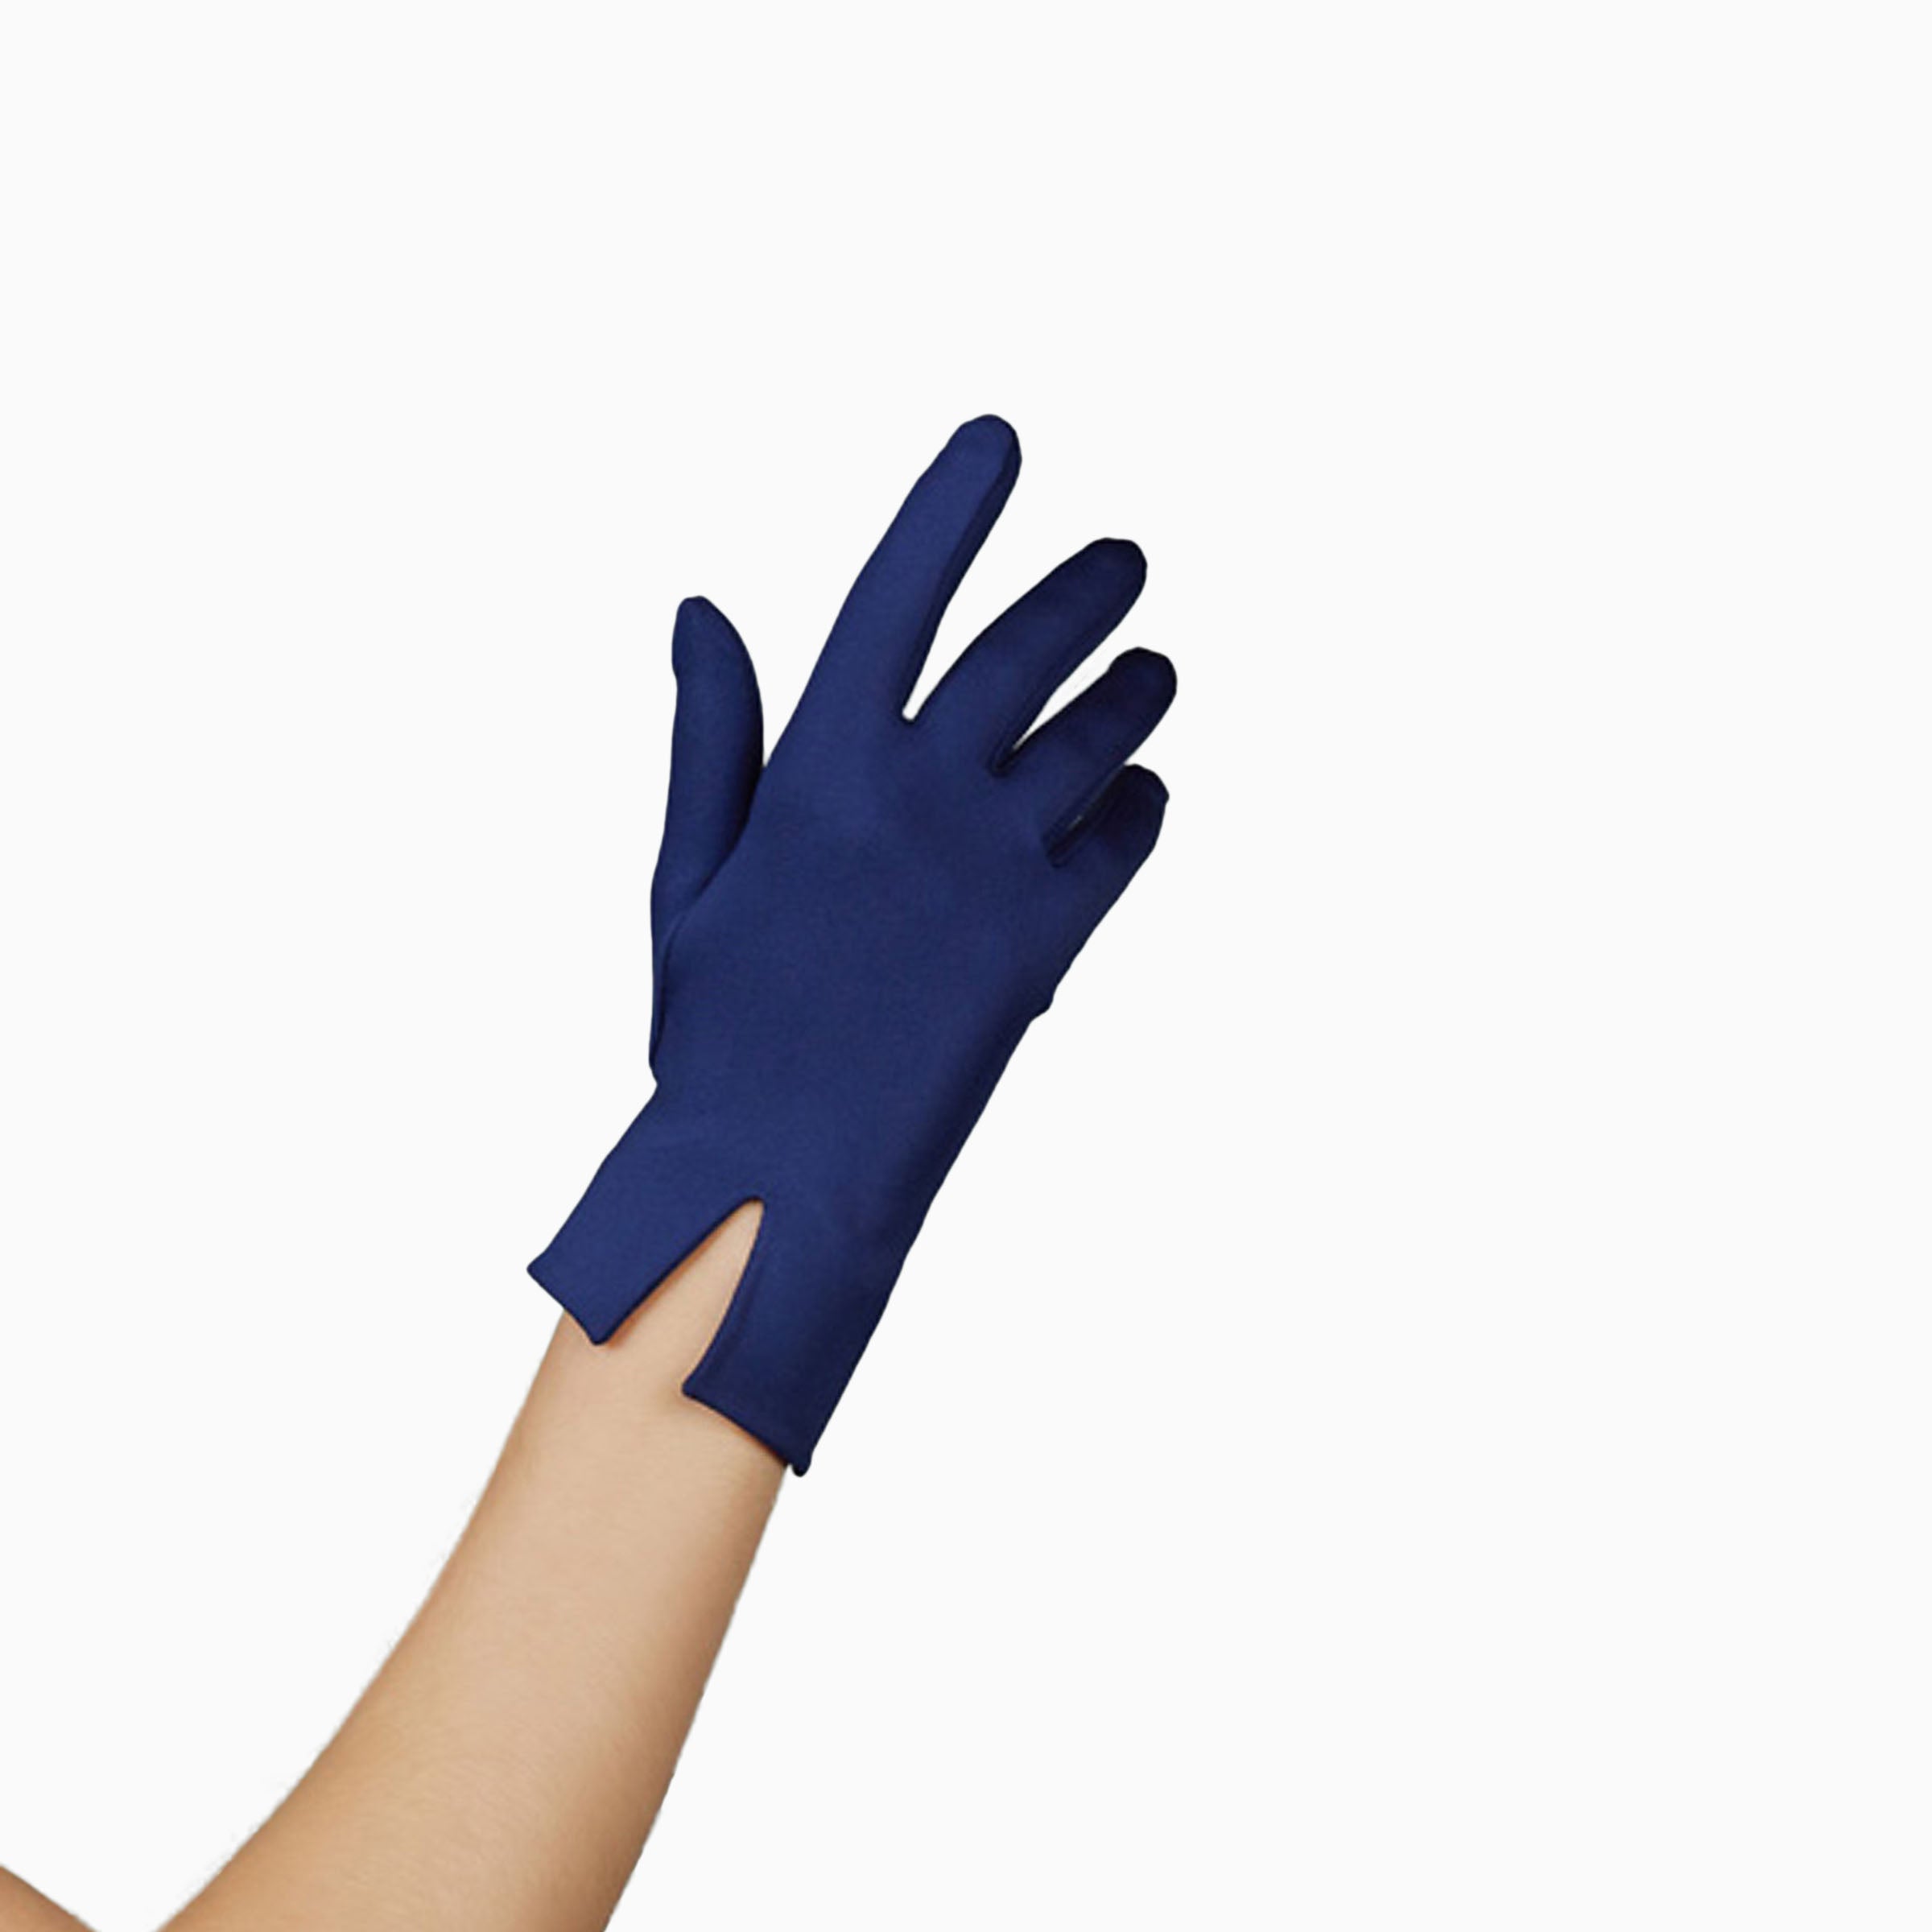 ISABELLE glove in Parisian blue.